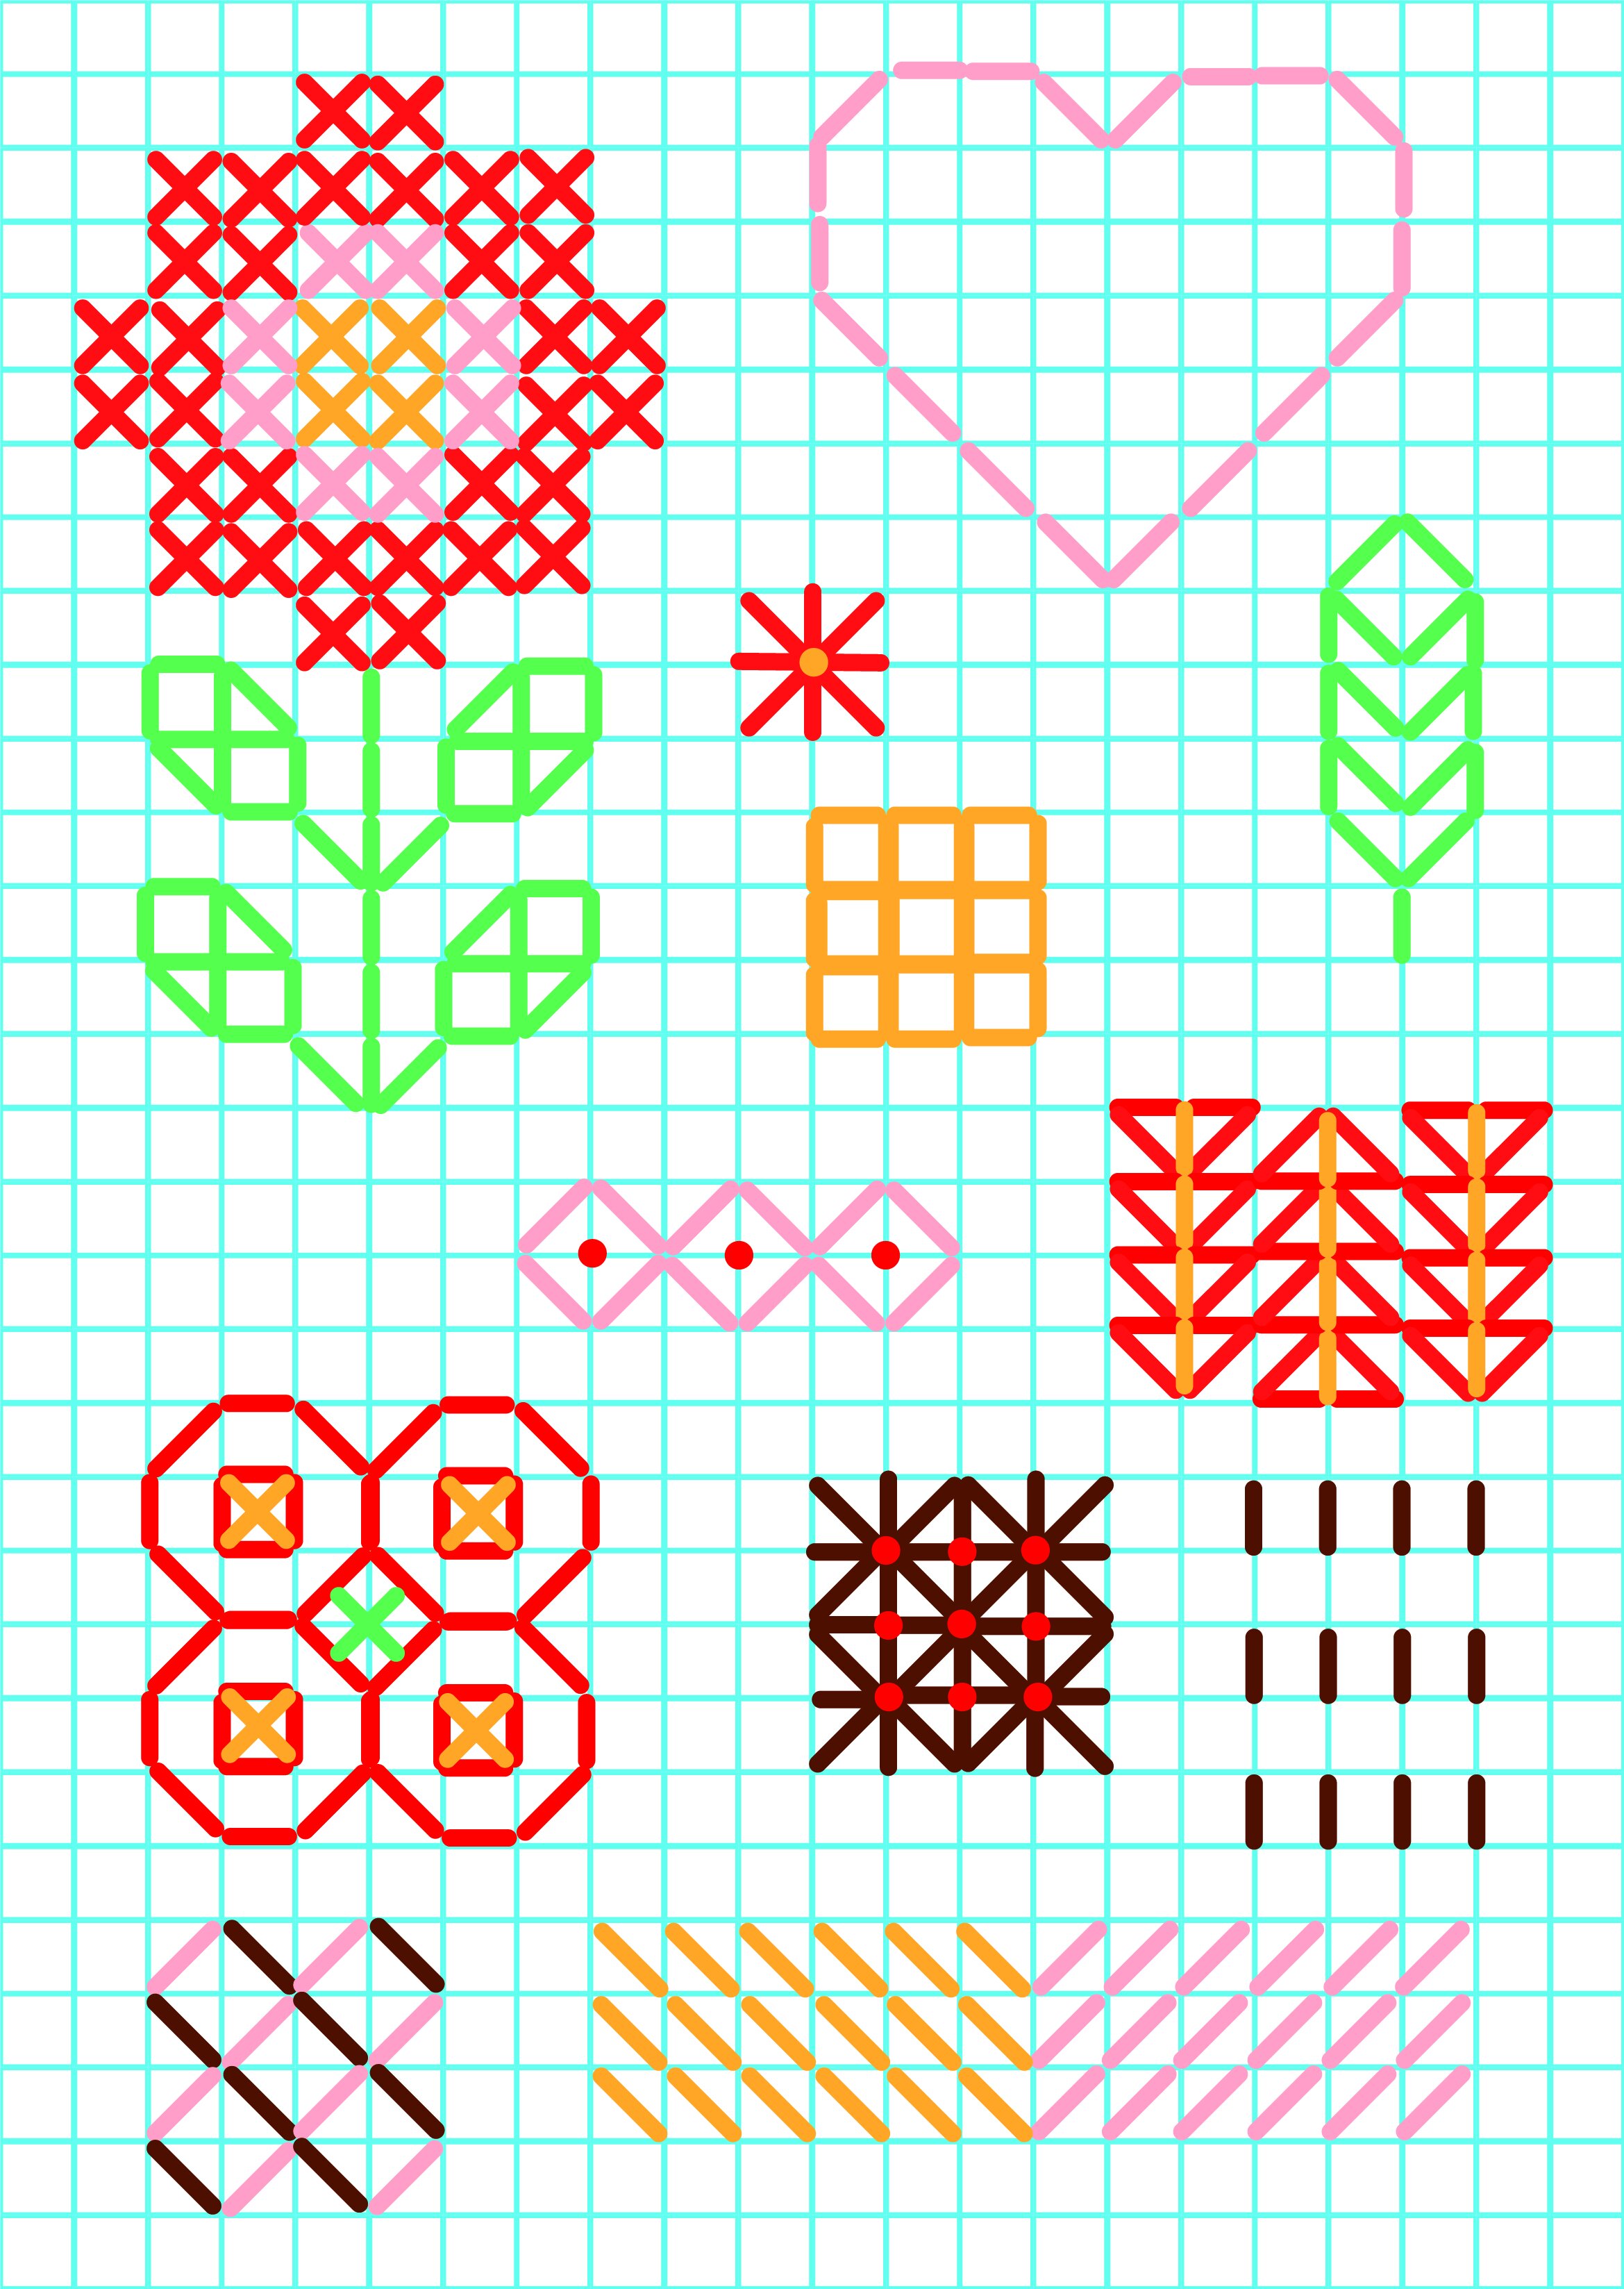 Stitch-Grid with flower.jpg